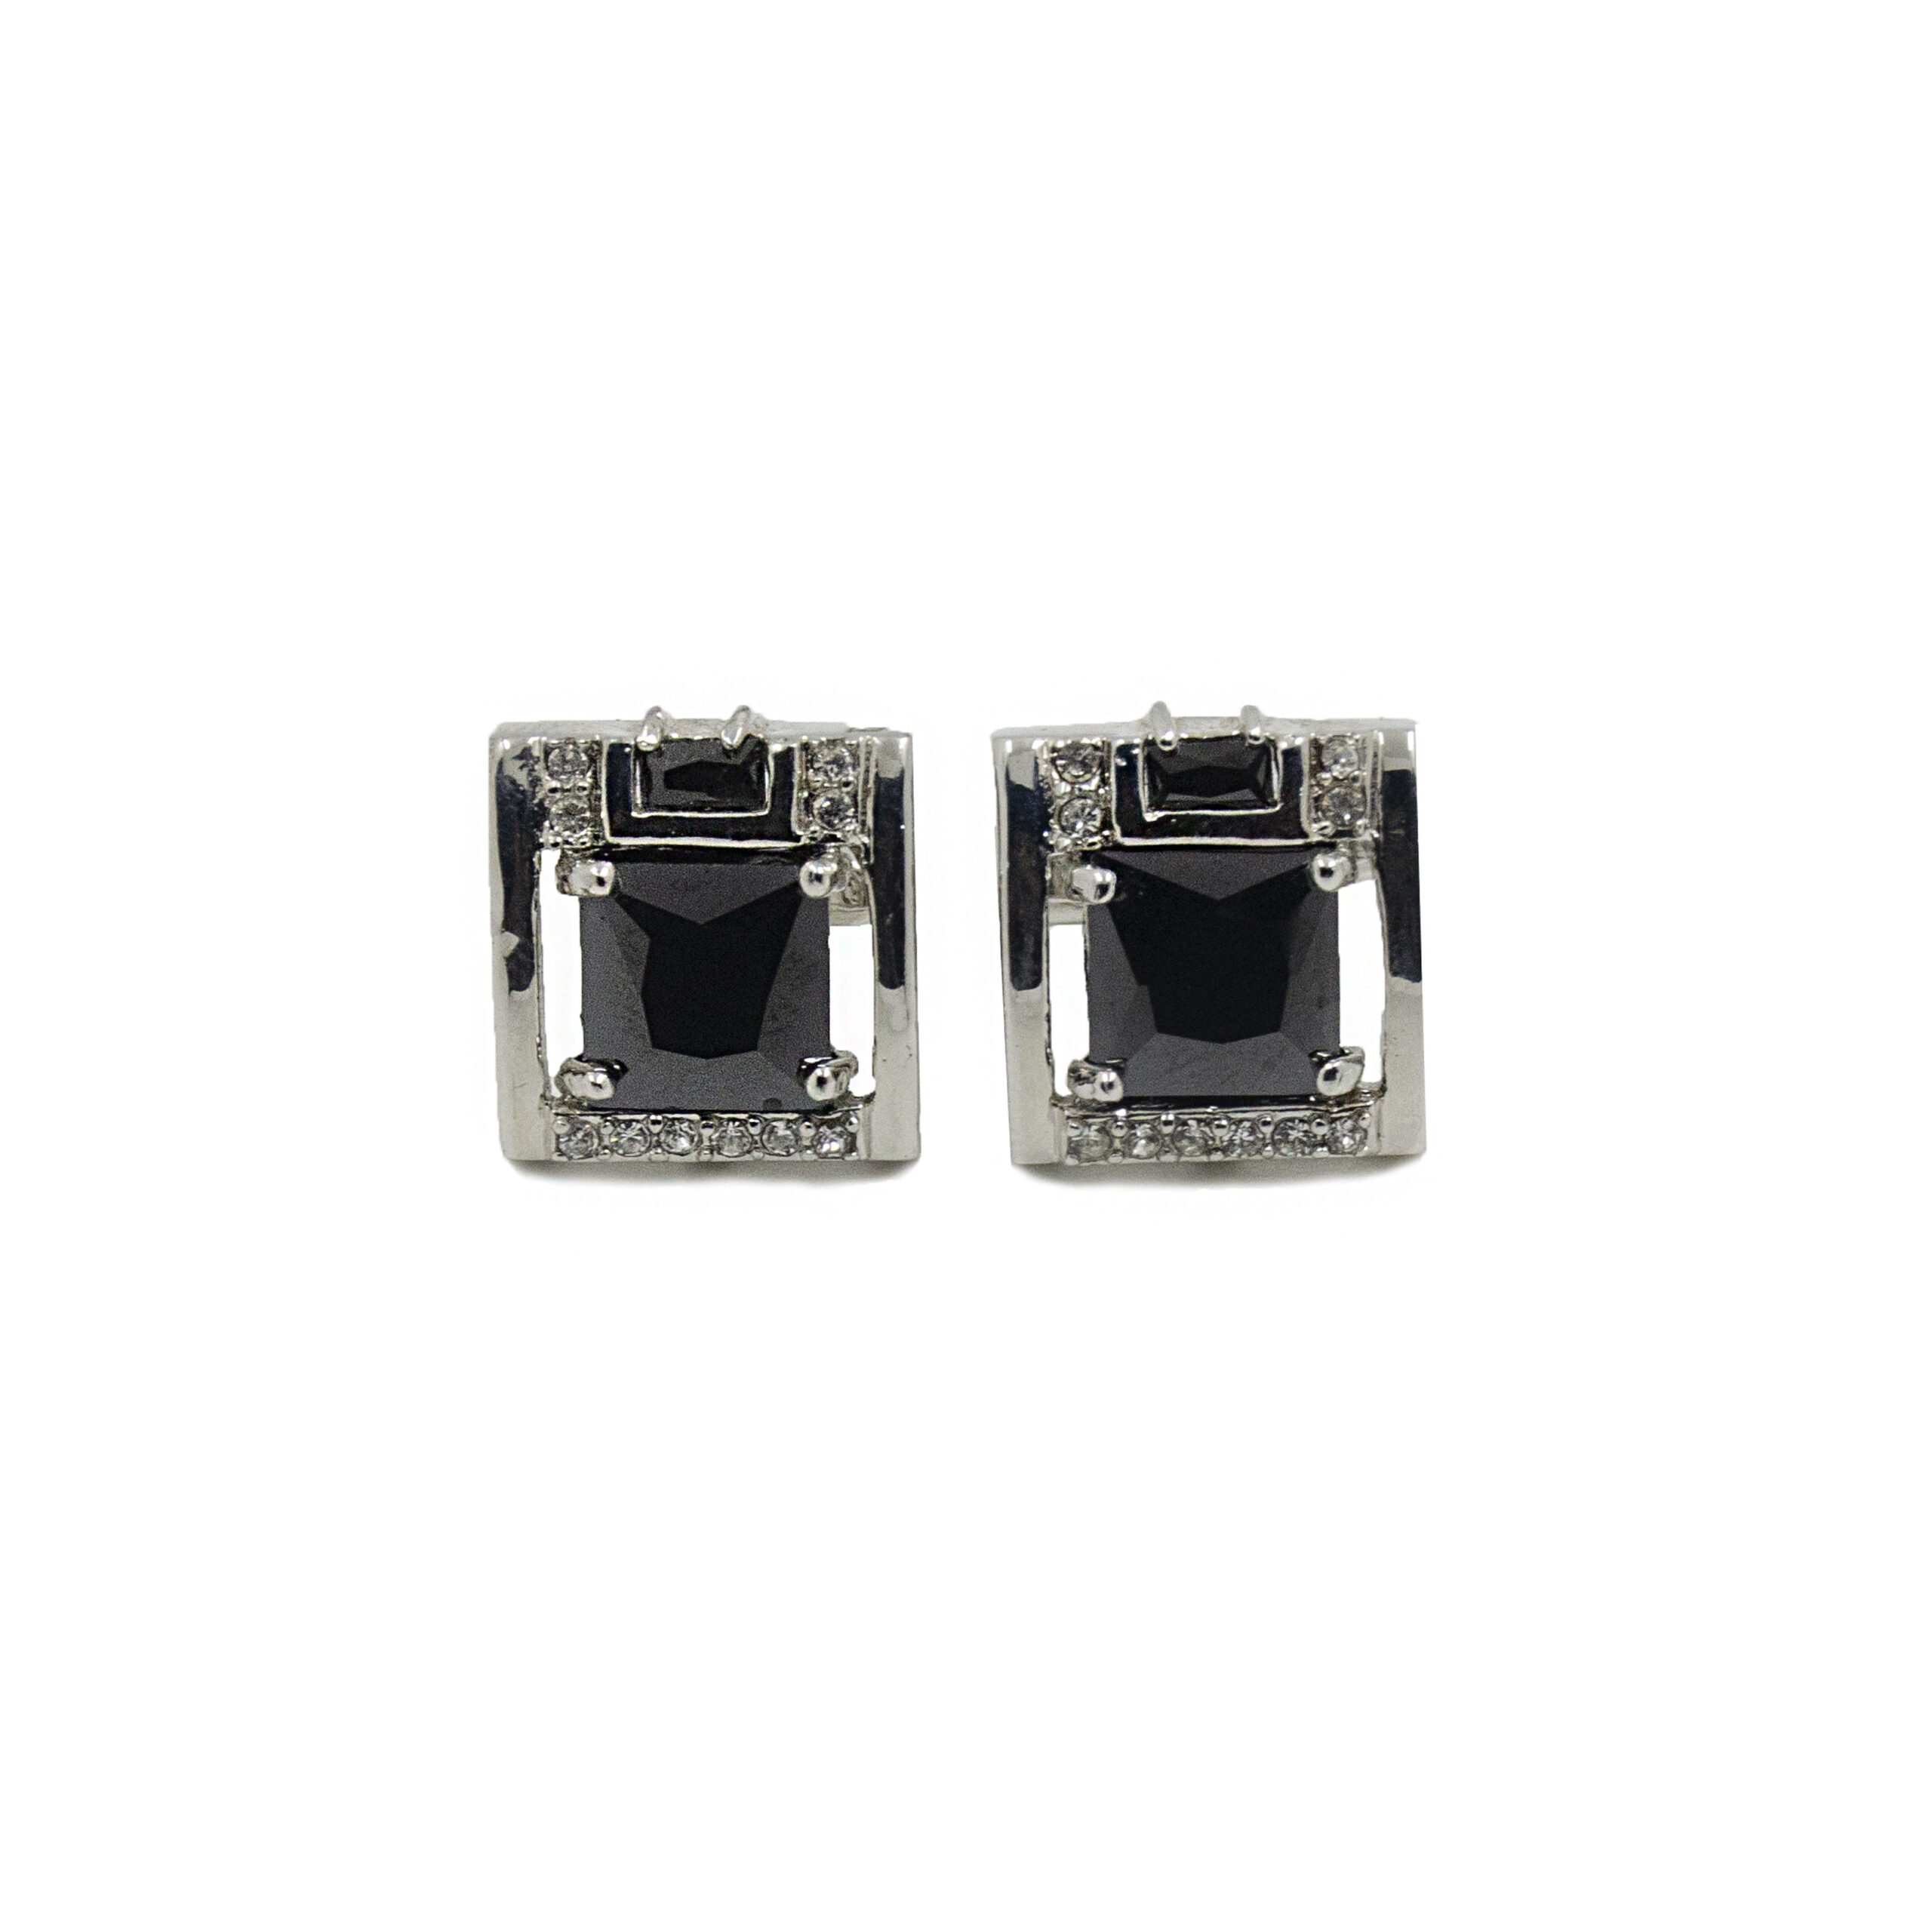 Cufflers Designer Men’s Black stone Exclusive Cufflinks with Gift Box – CU-4011